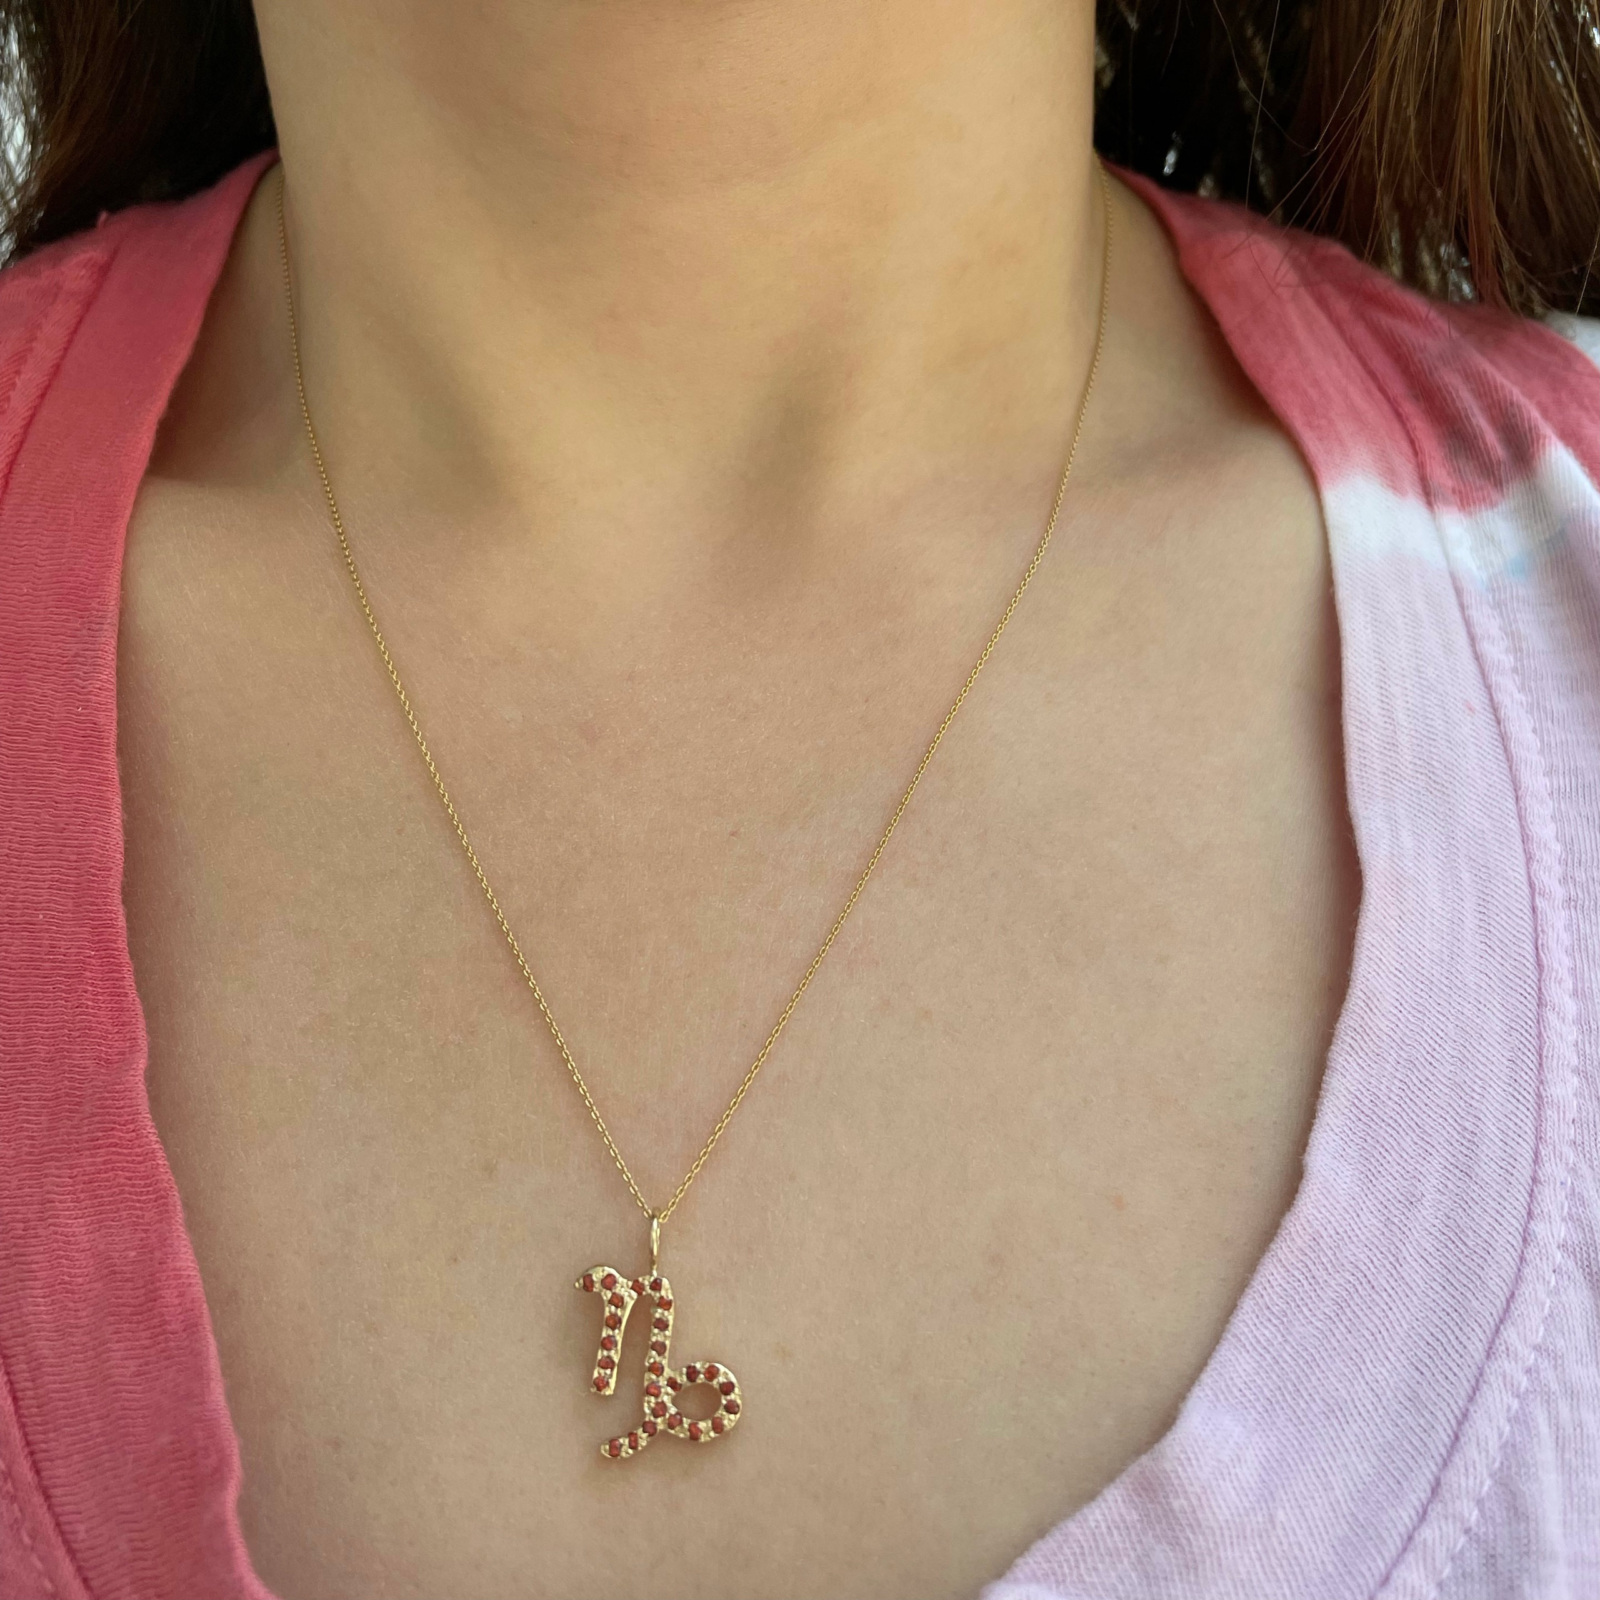 Capricorn zodiac sign charm pendant necklace